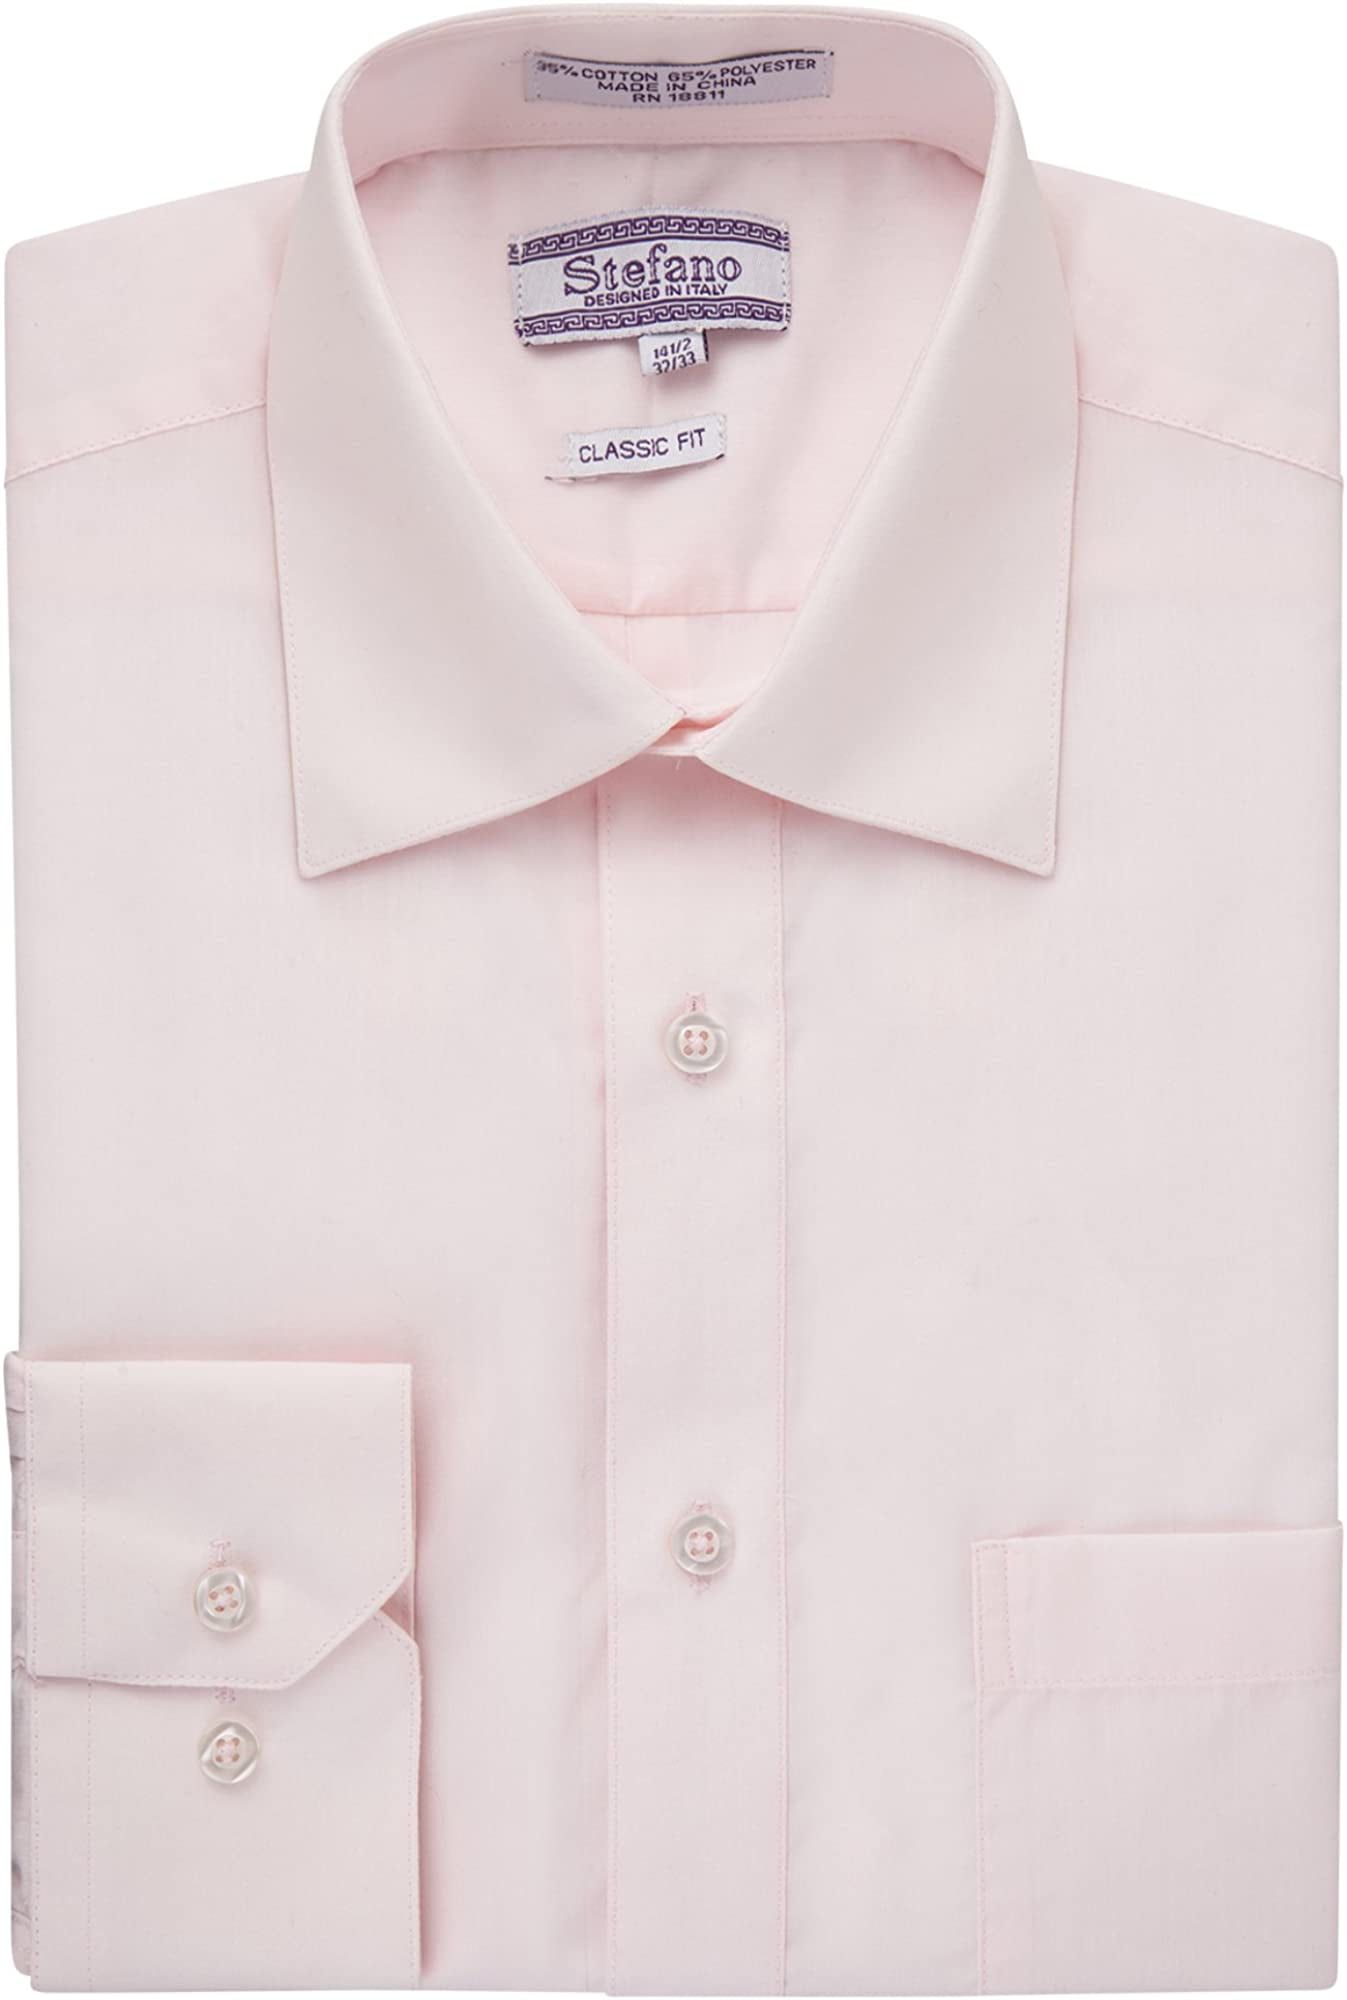 Stefano Mens Classic Fit Convertible Cuffs Solid Dress Shirt | Walmart ...